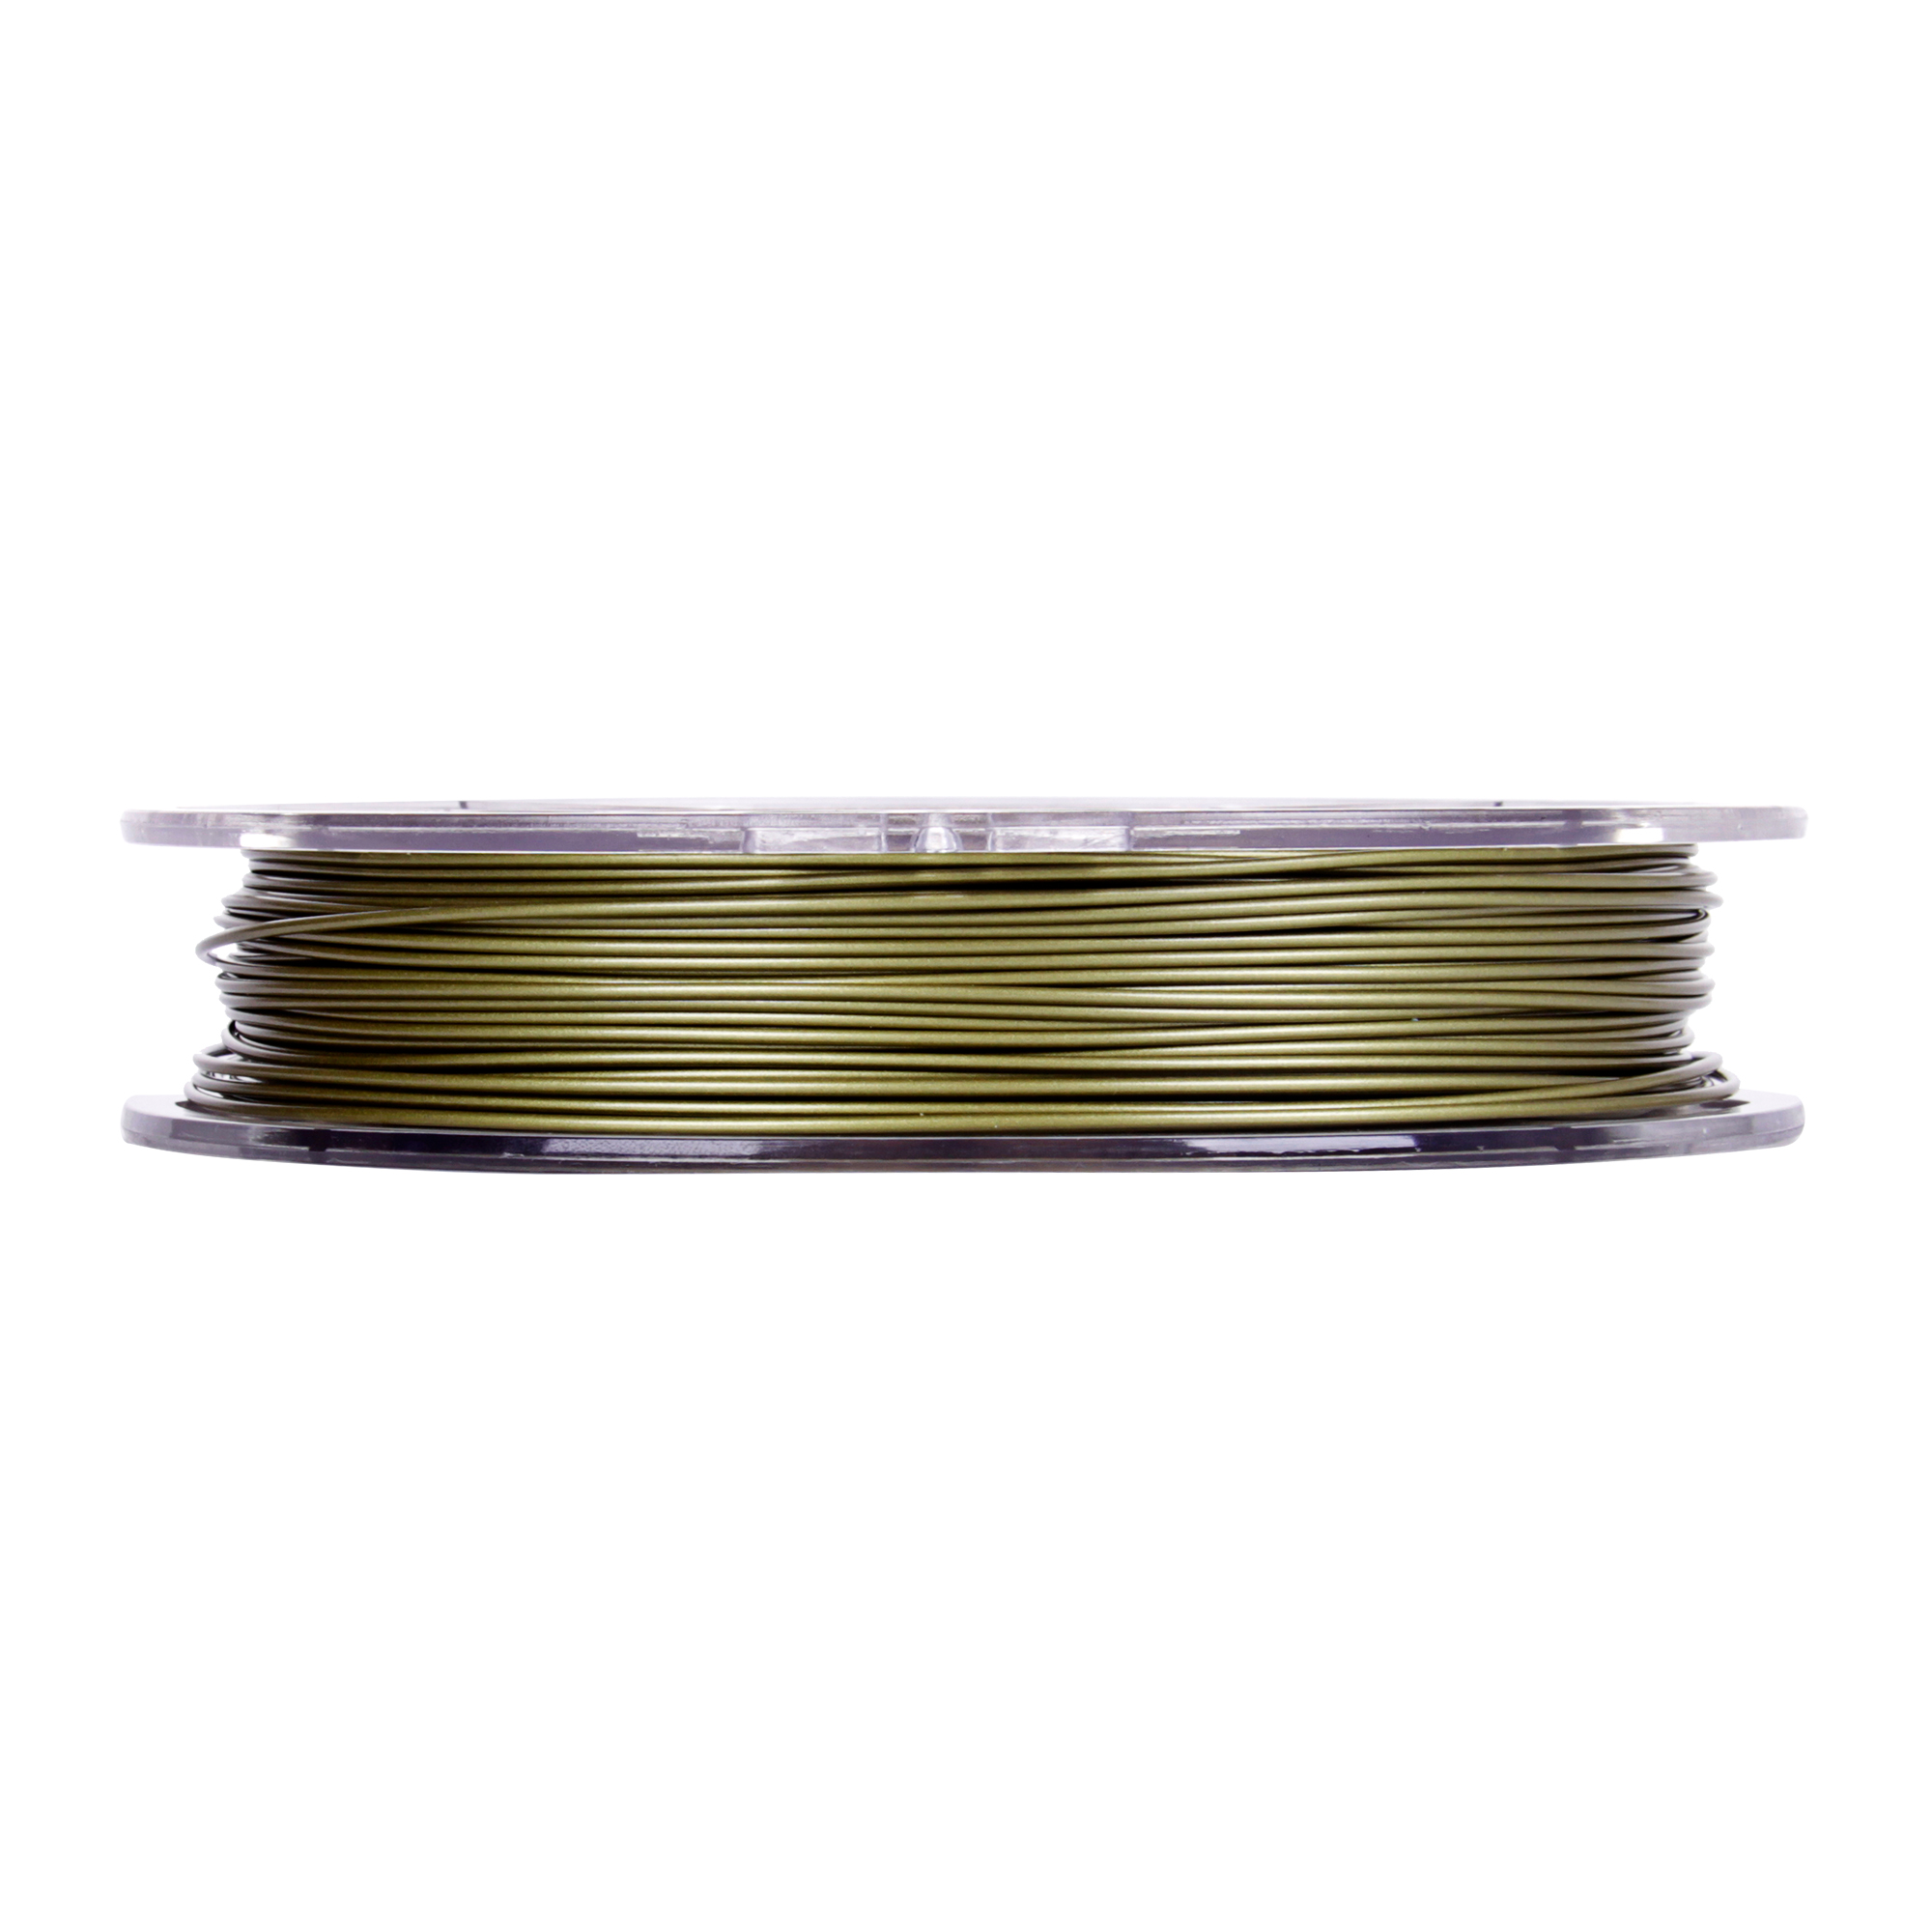 eSun 1.75mm 3D Printing Filament 0.5kg-Bronze